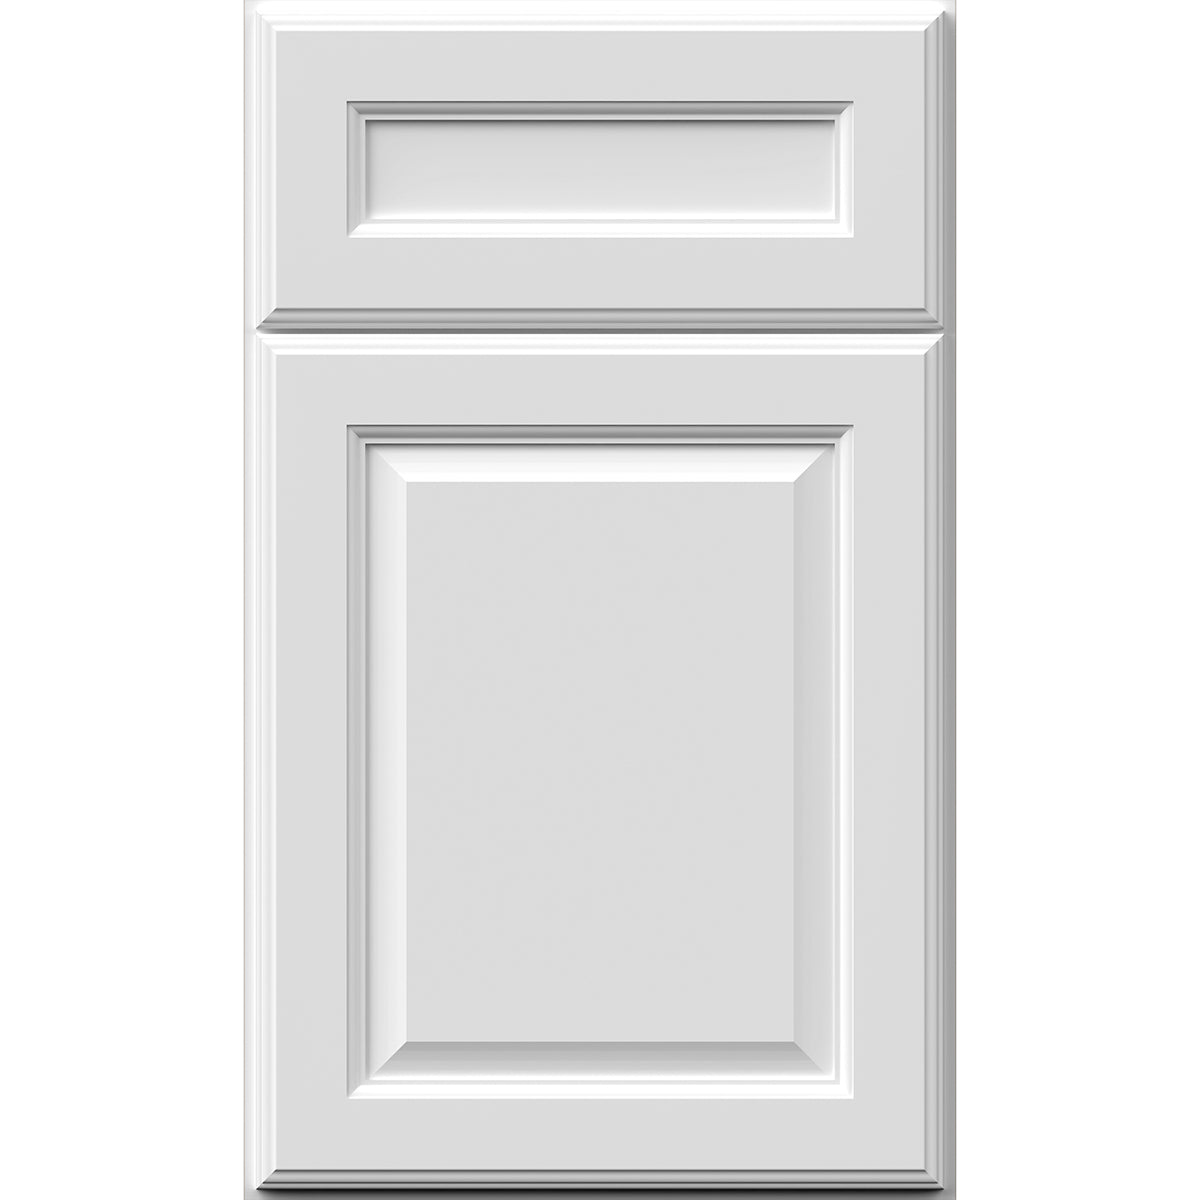 Fabuwood Value Premium Hallmark Frost Recessed Panel White Door Sample